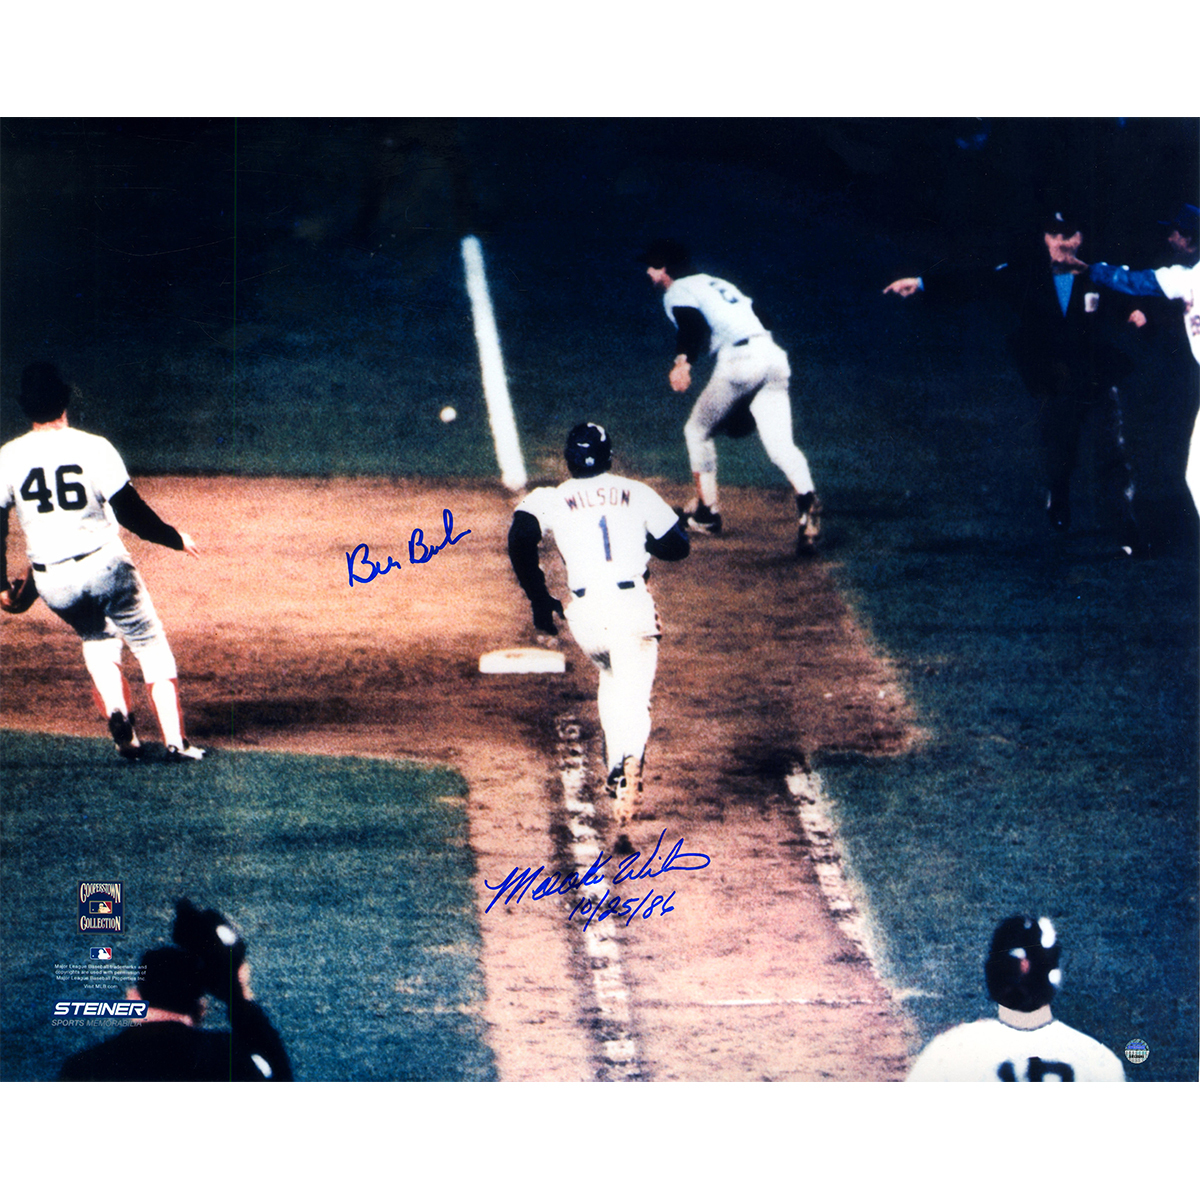 1986 Mookie Wilson World Series Game Six Worn Cleats. Baseball